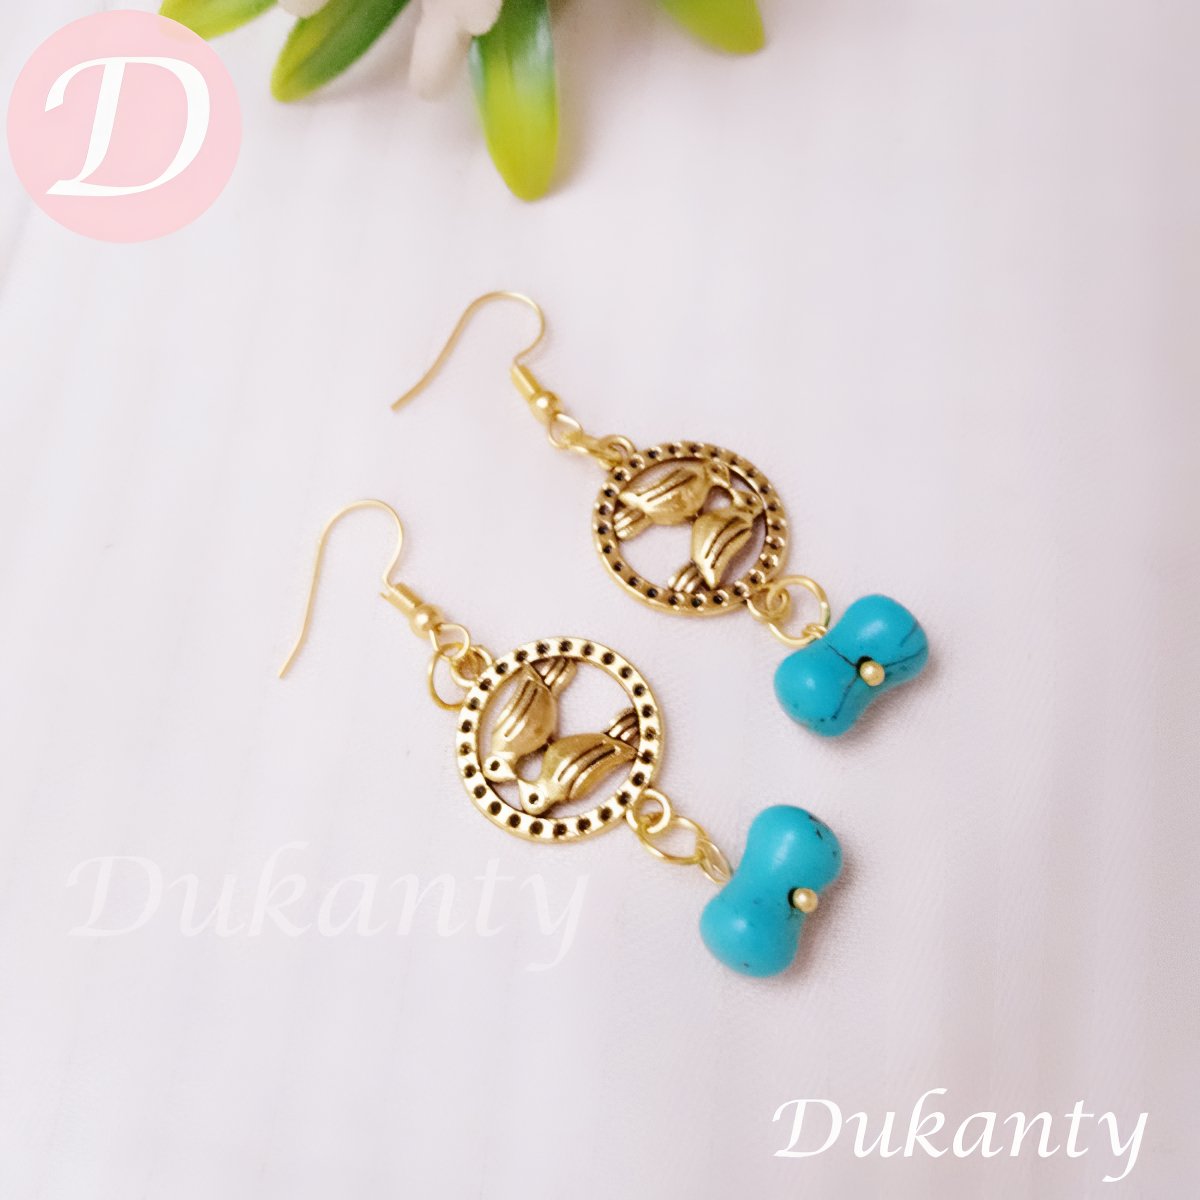 Durra Earrings - Turquoise Stone